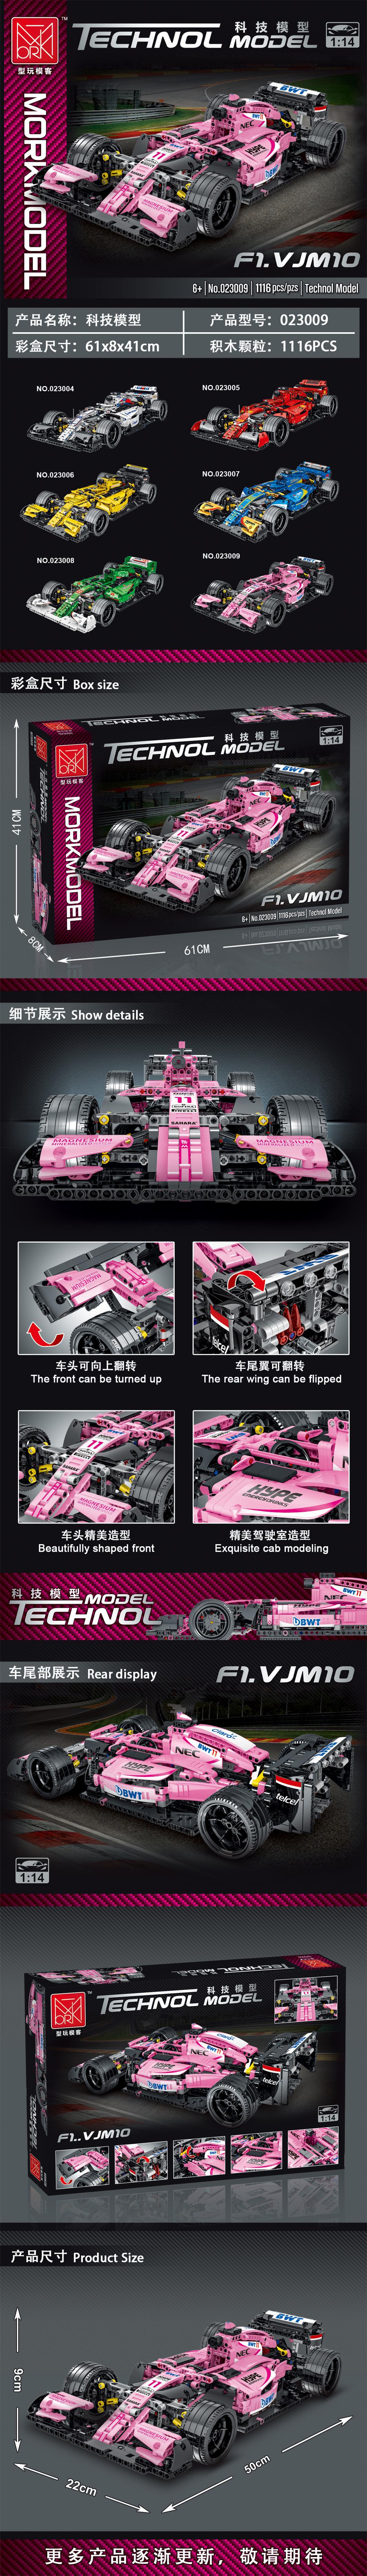 MORK 023009 Pink Force India, modelo de coche deportivo, juego de bloques de construcción de juguete